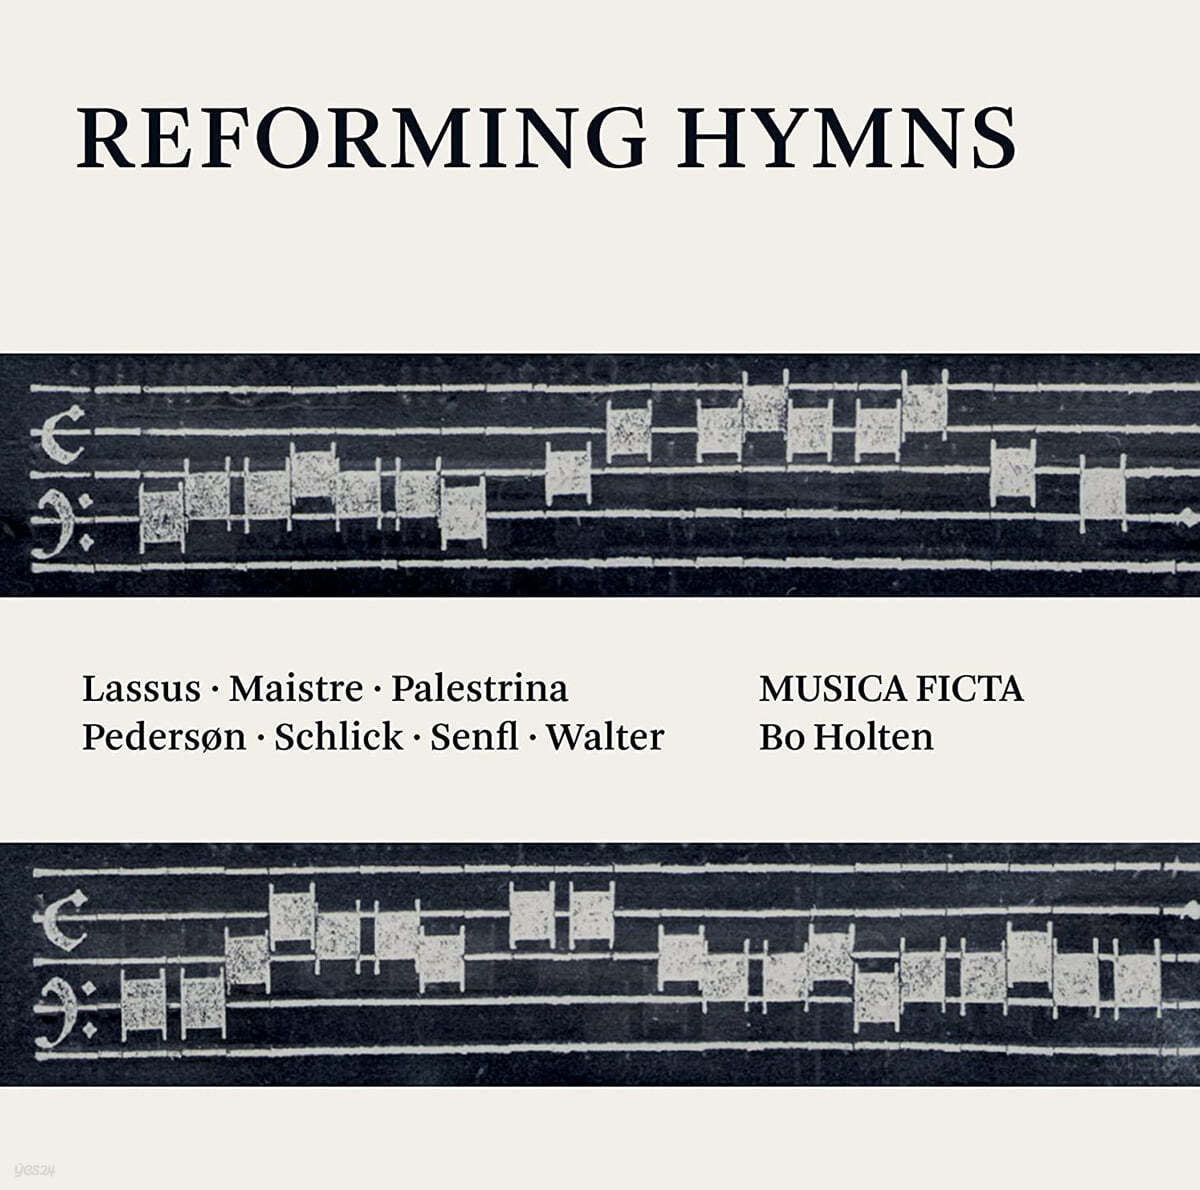 Bo Holten 르네상스 시대의 다양한 성가 (Reforming Hymns)